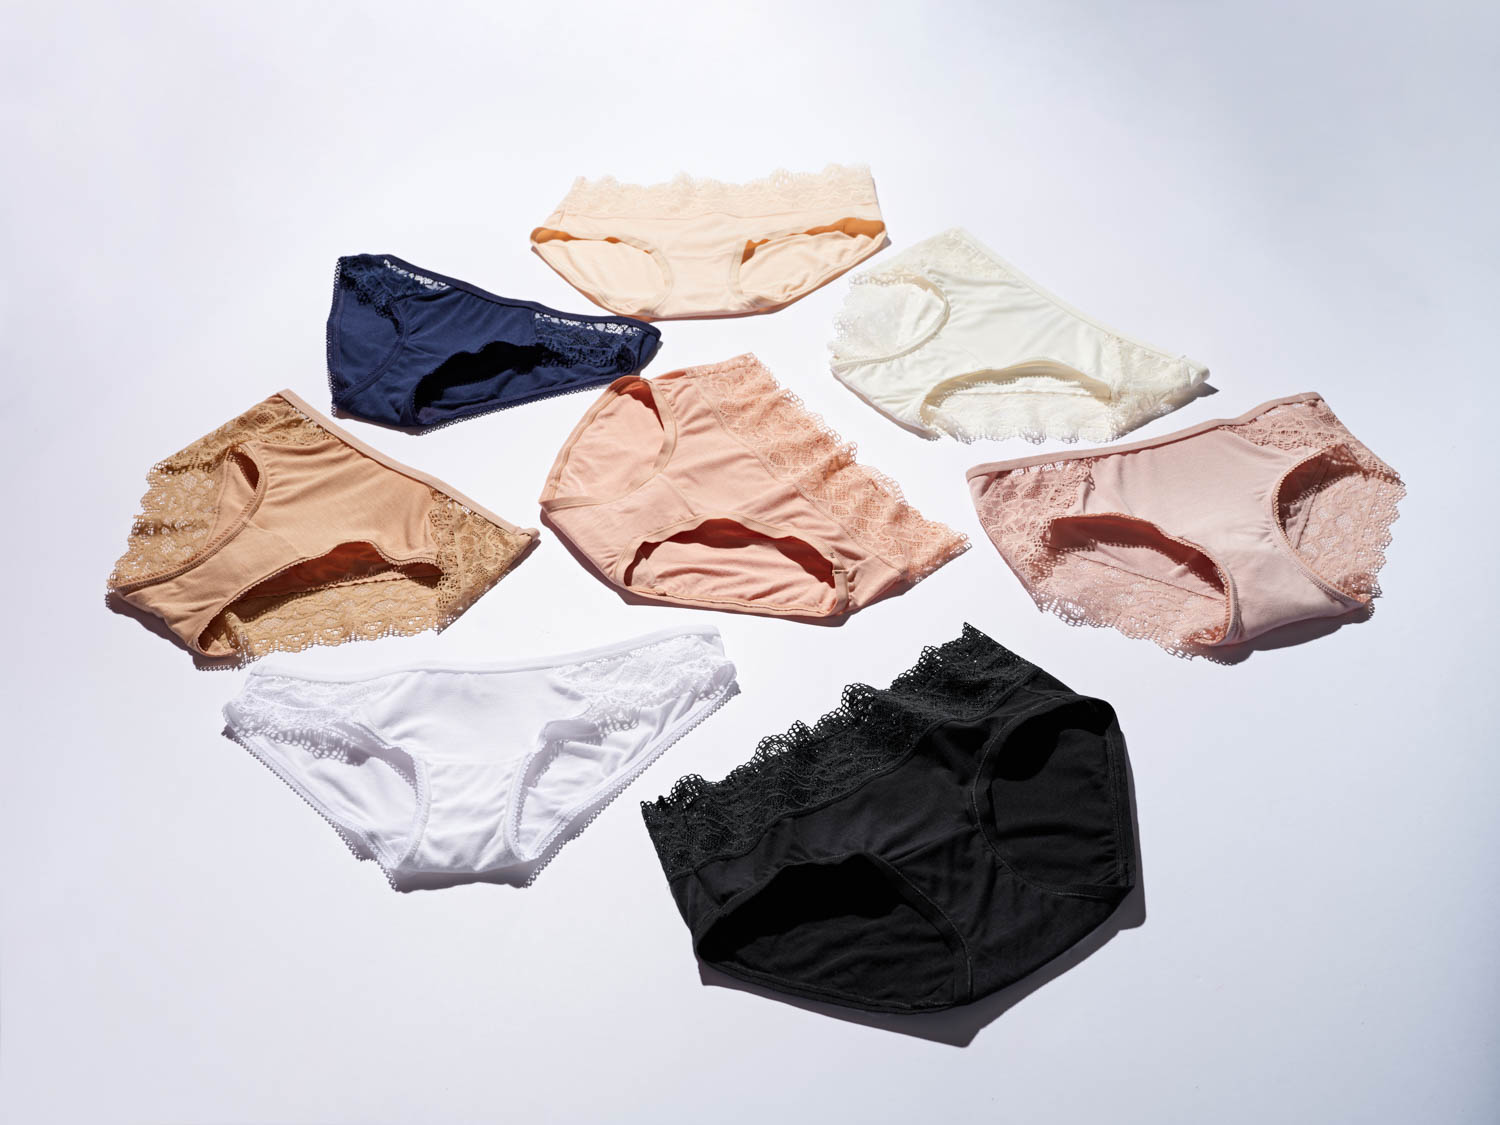 The Real Reason Women's Underwear Has A Pocket